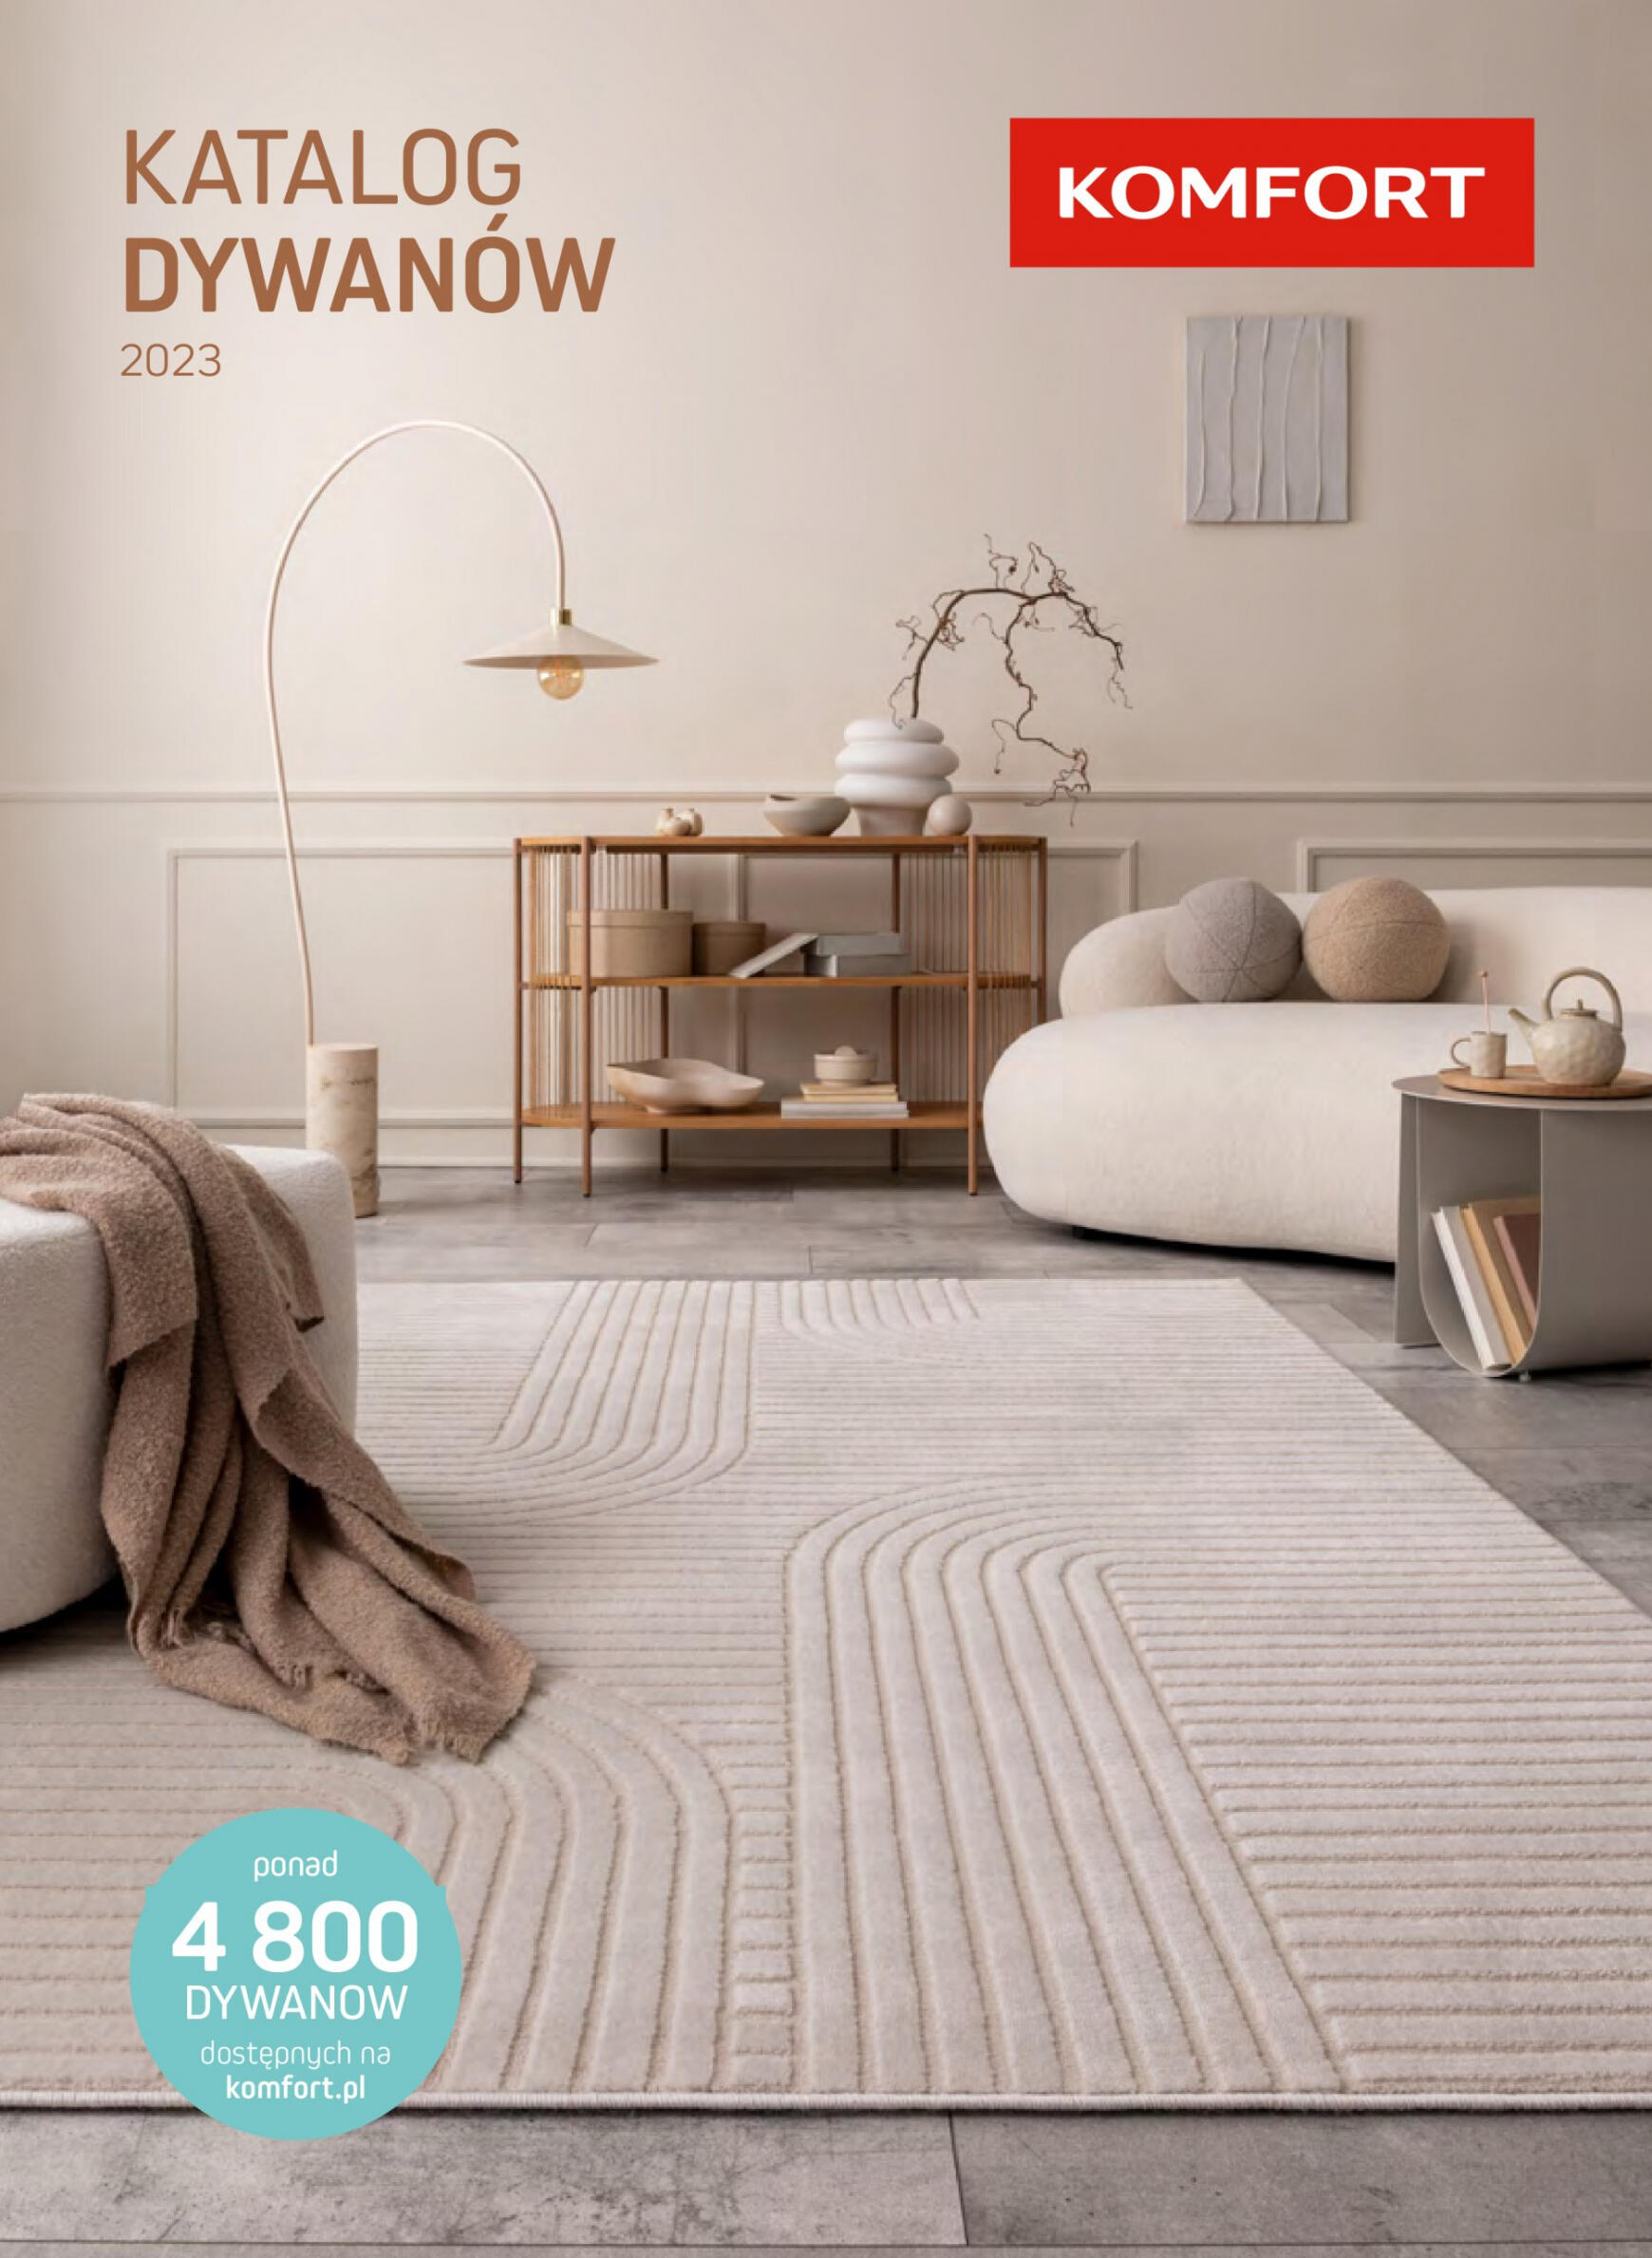 komfort - Komfort - Katalog dywany - page: 1